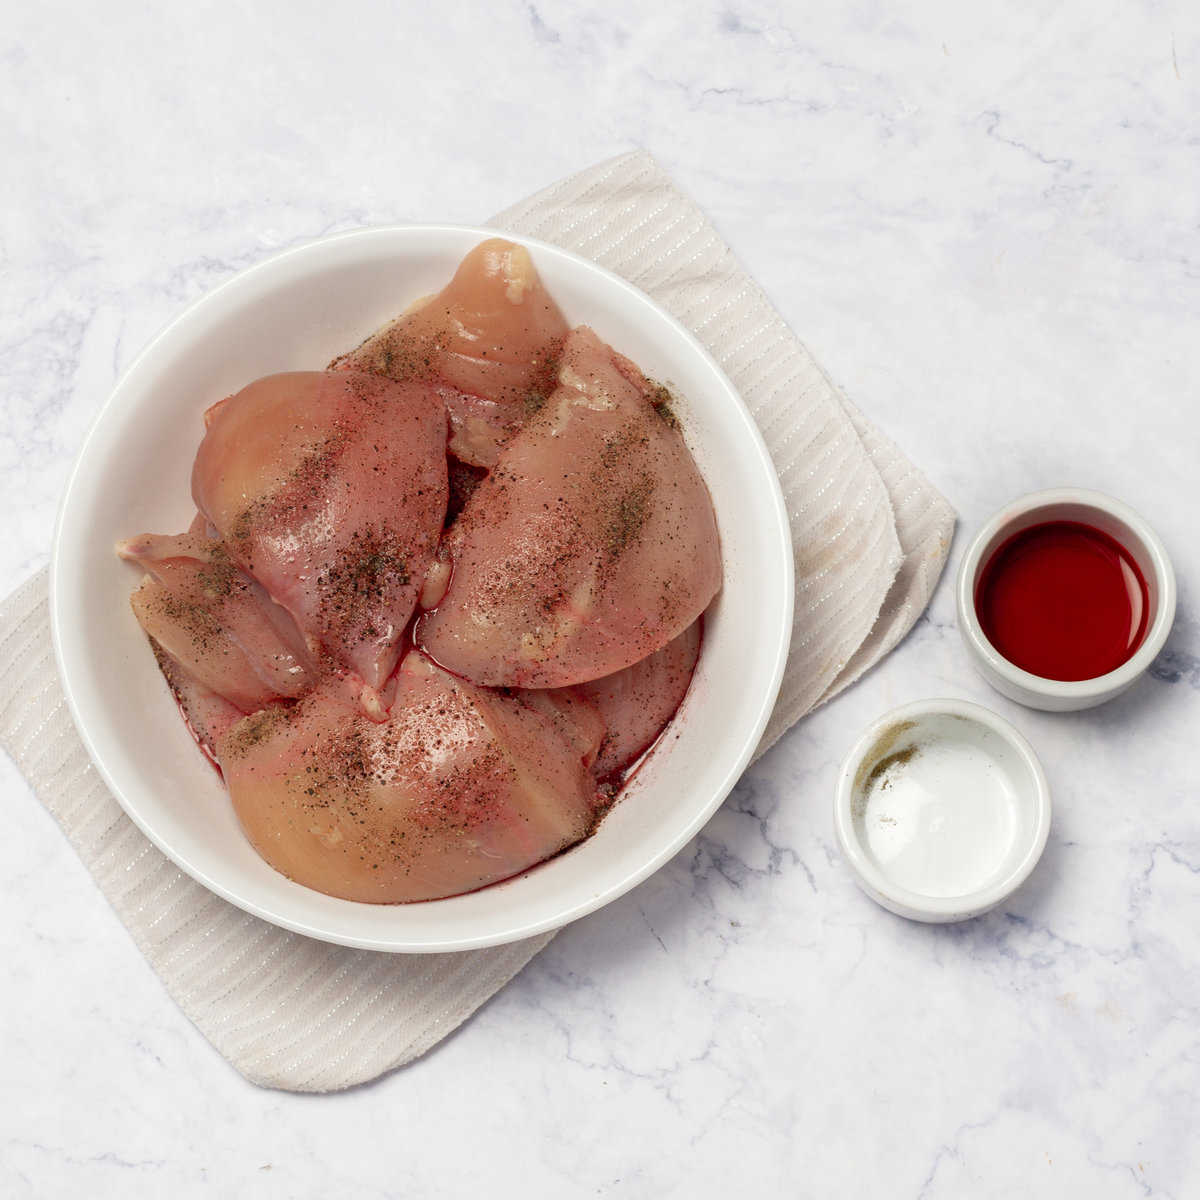 marinated chicken breasts